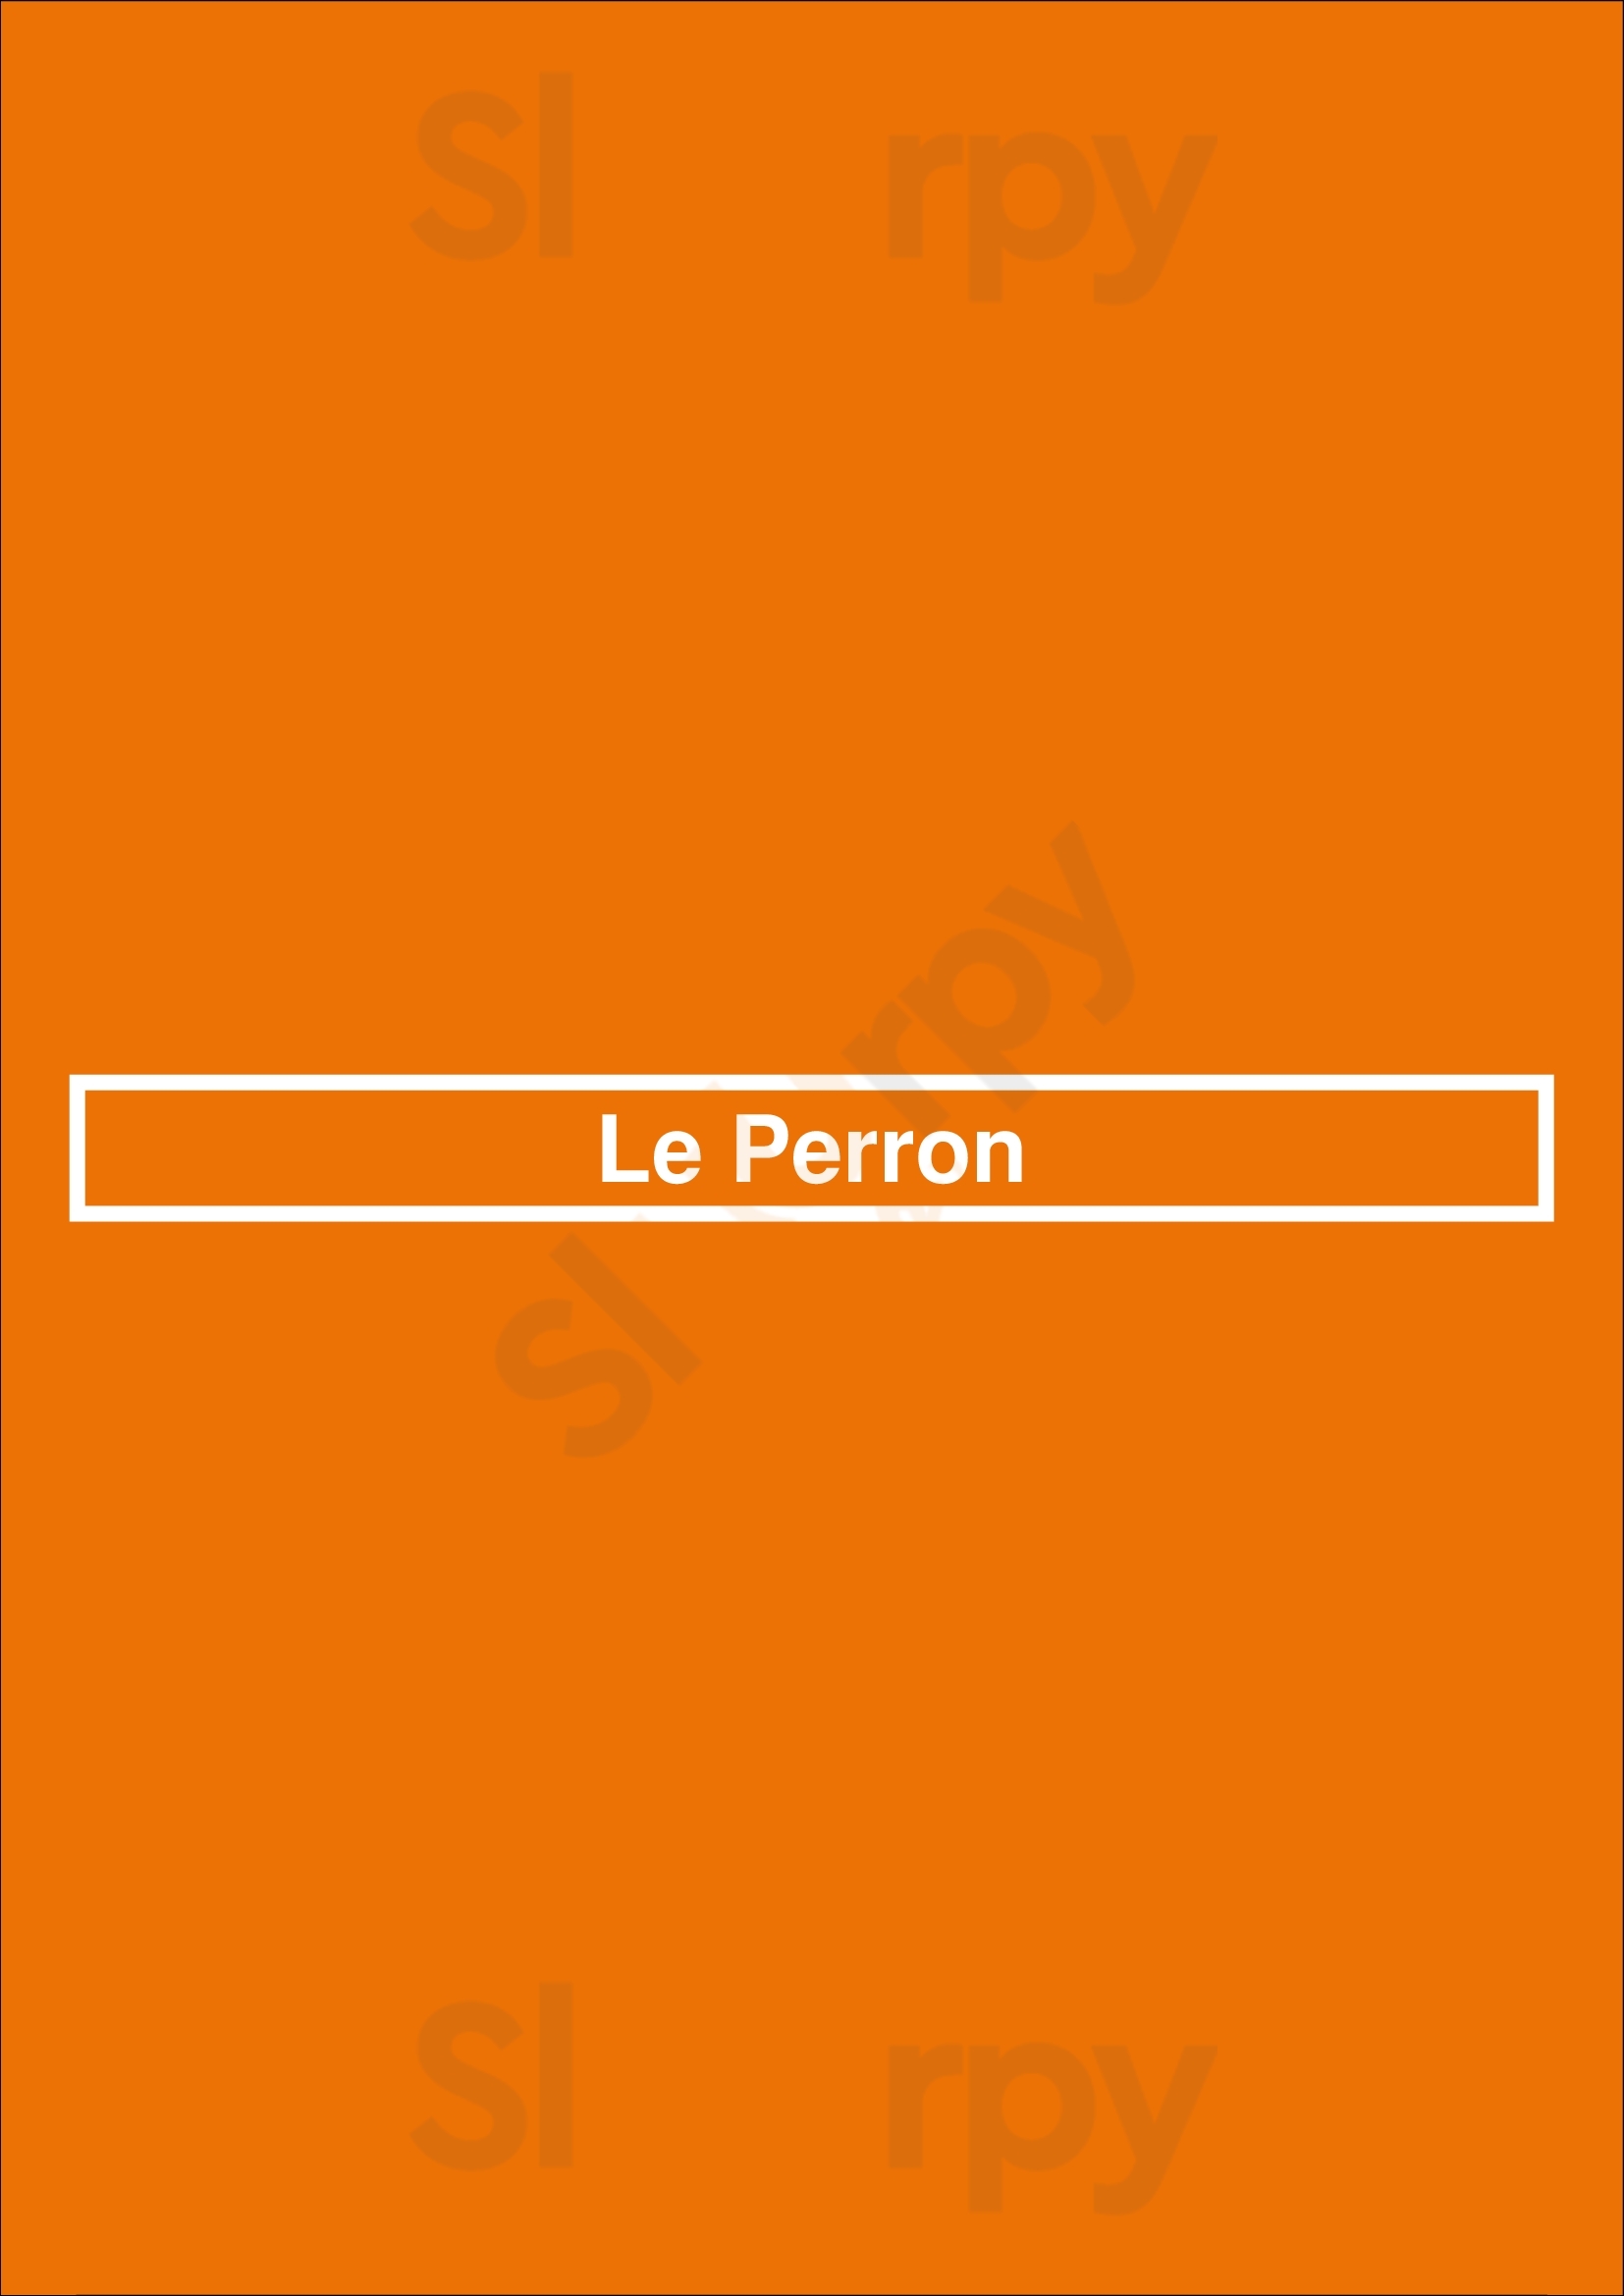 Le Perron Paris Menu - 1